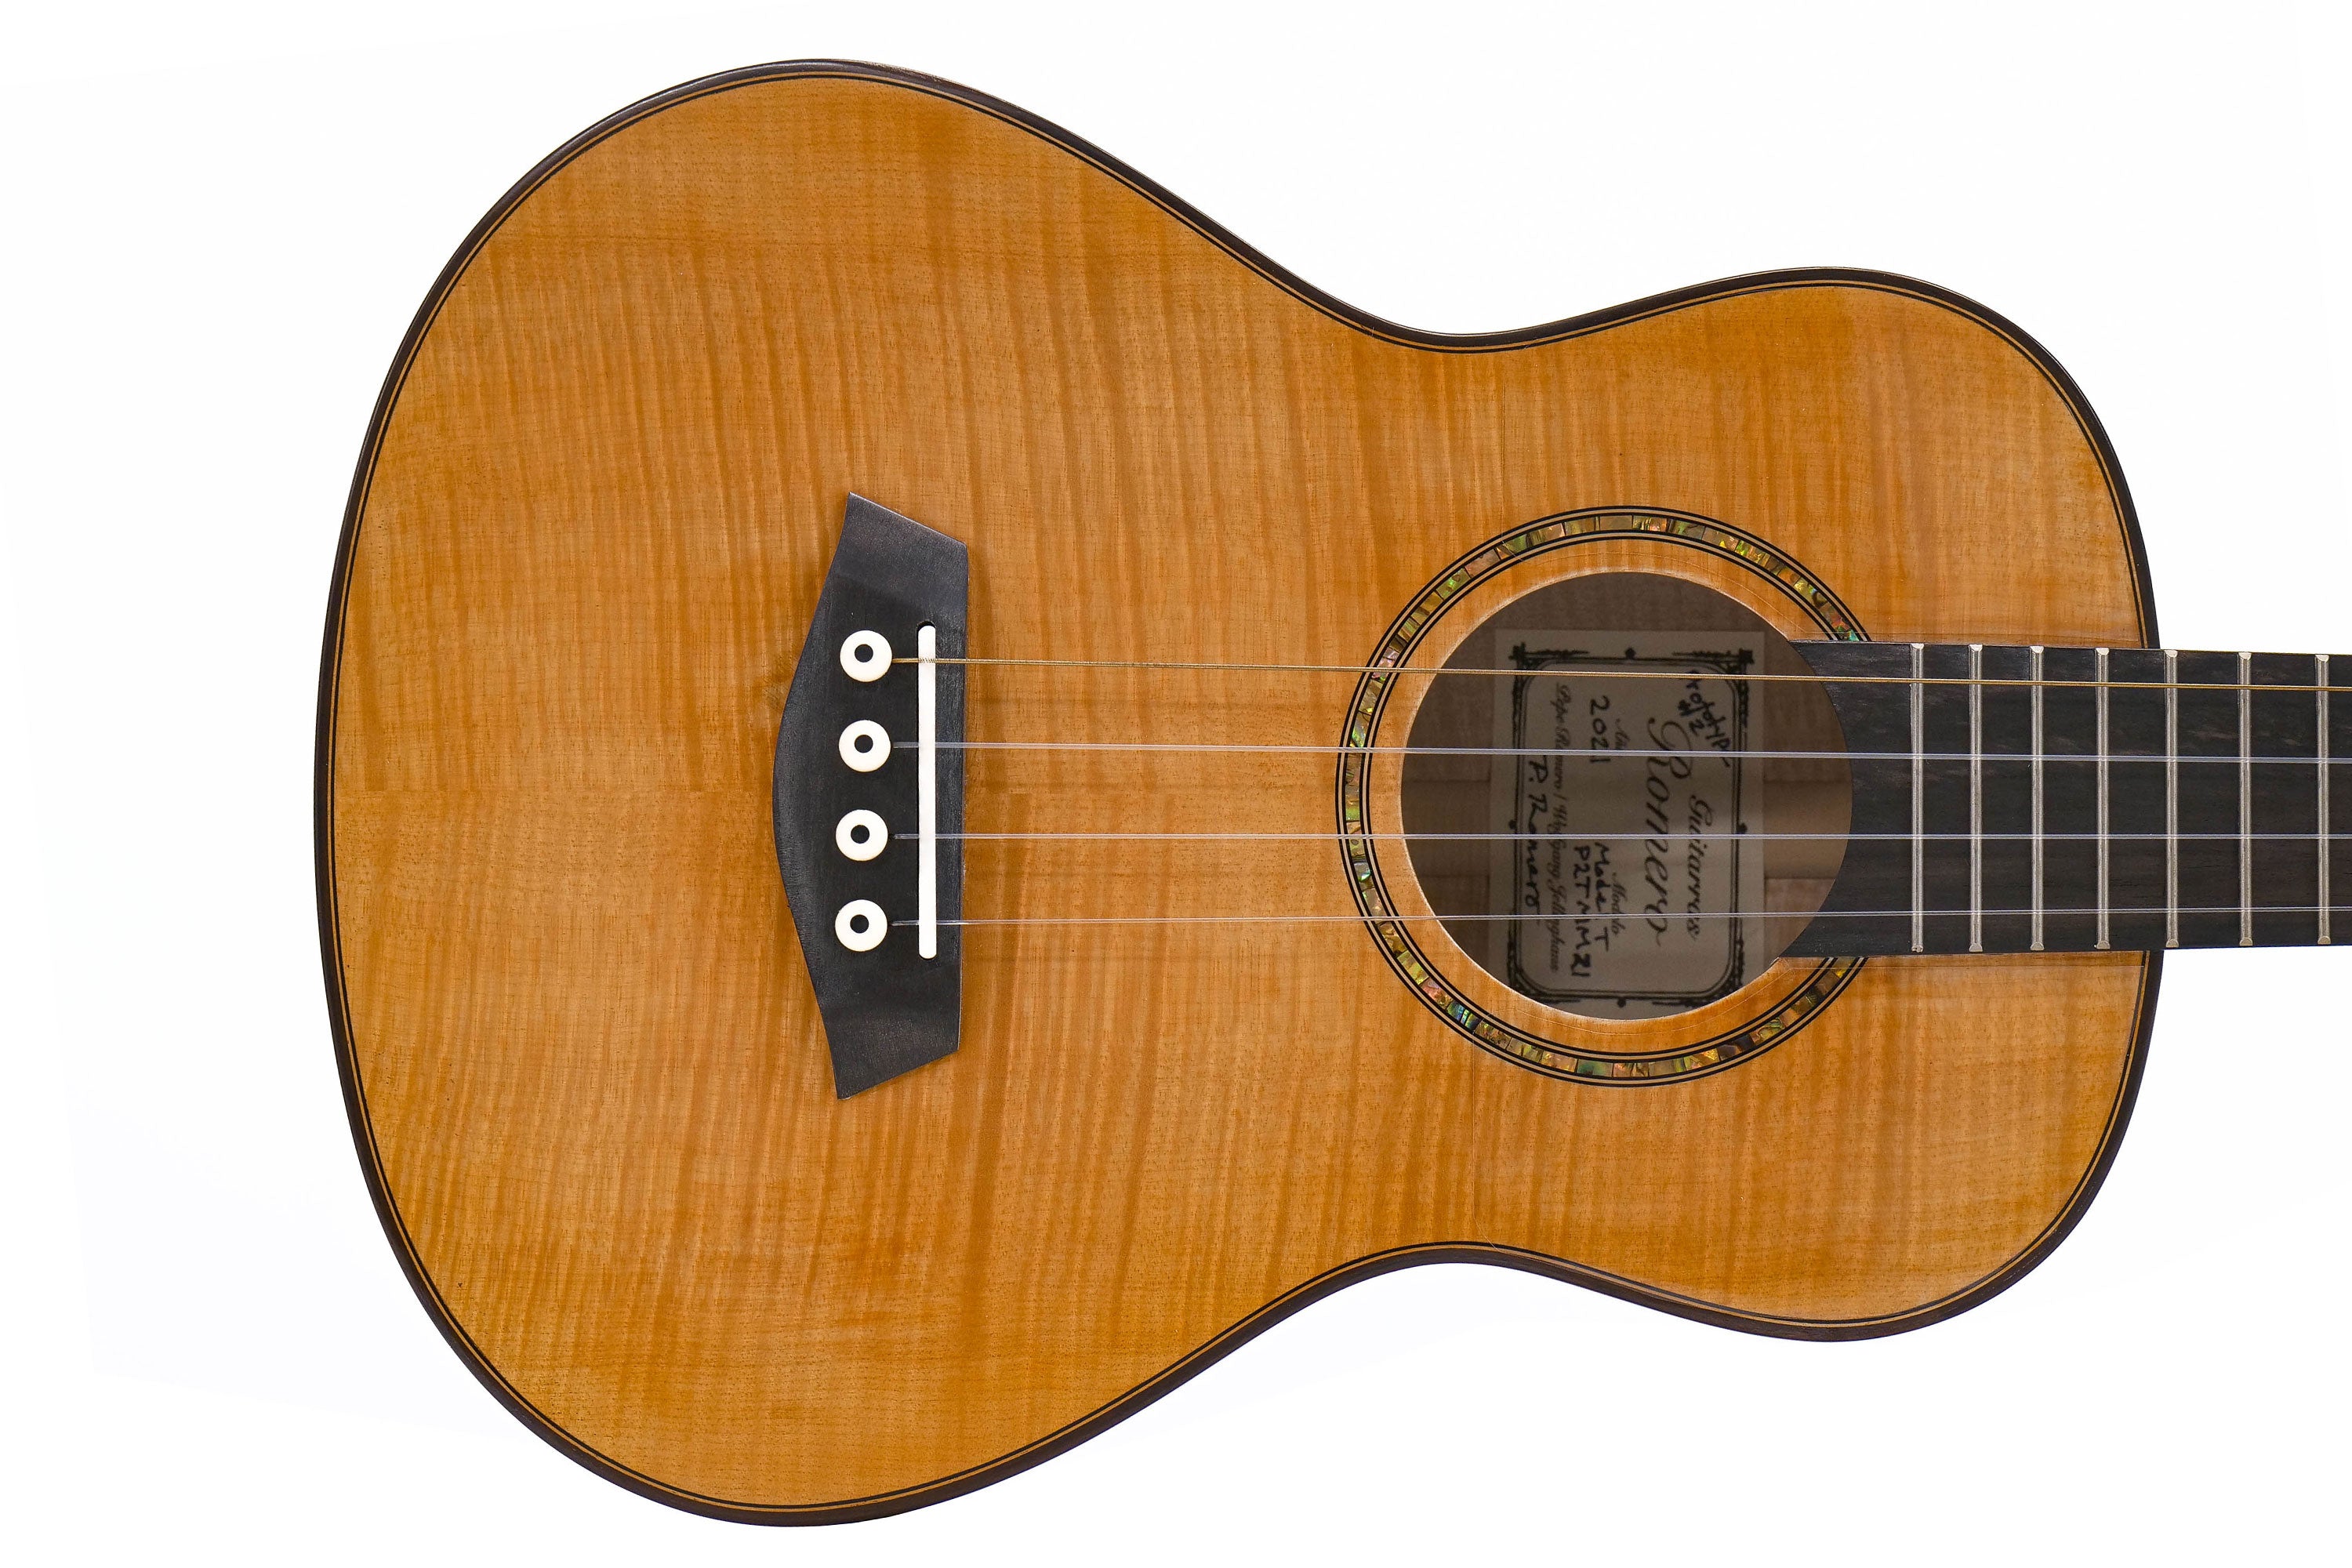 [DISCOUNTED] Guitarras Romero Custom Tenor Ukulele 